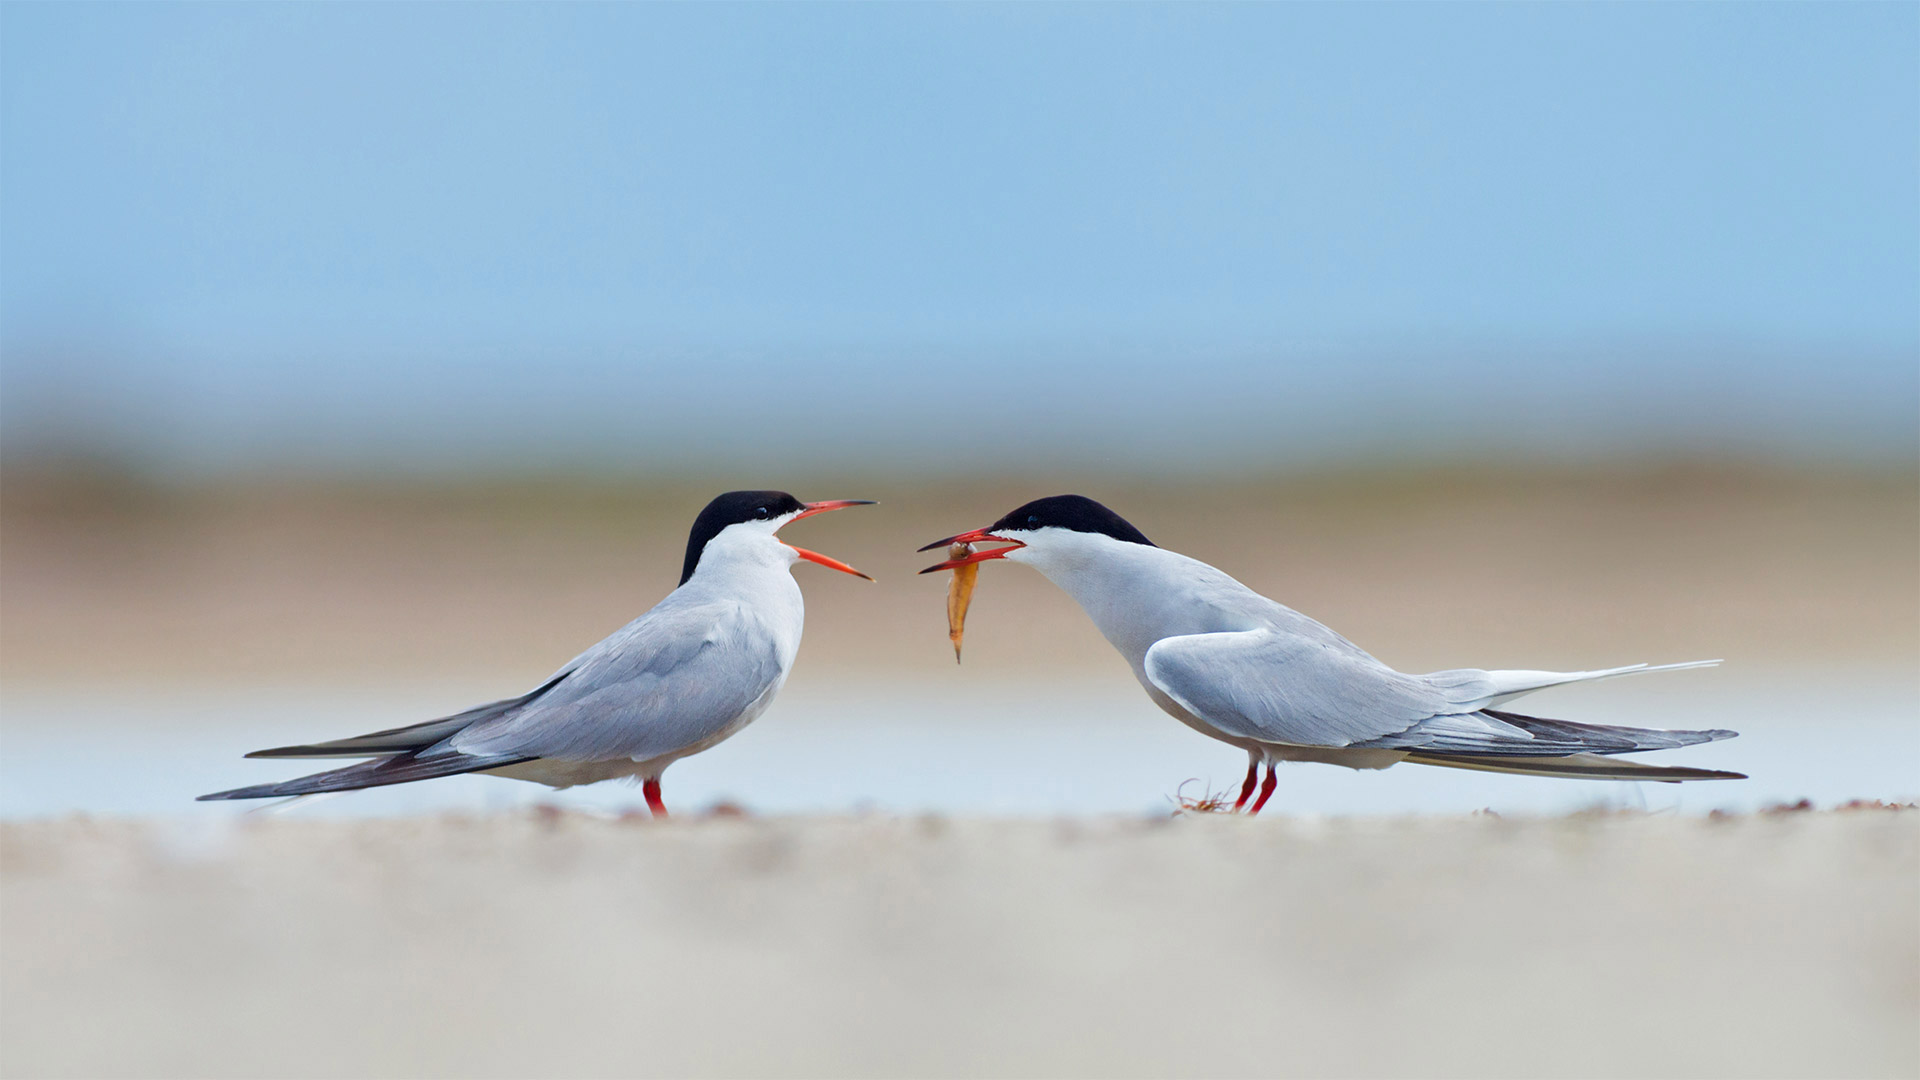 Common terns sharing a small fish - Ryzhkov Sergey/Shutterstock)